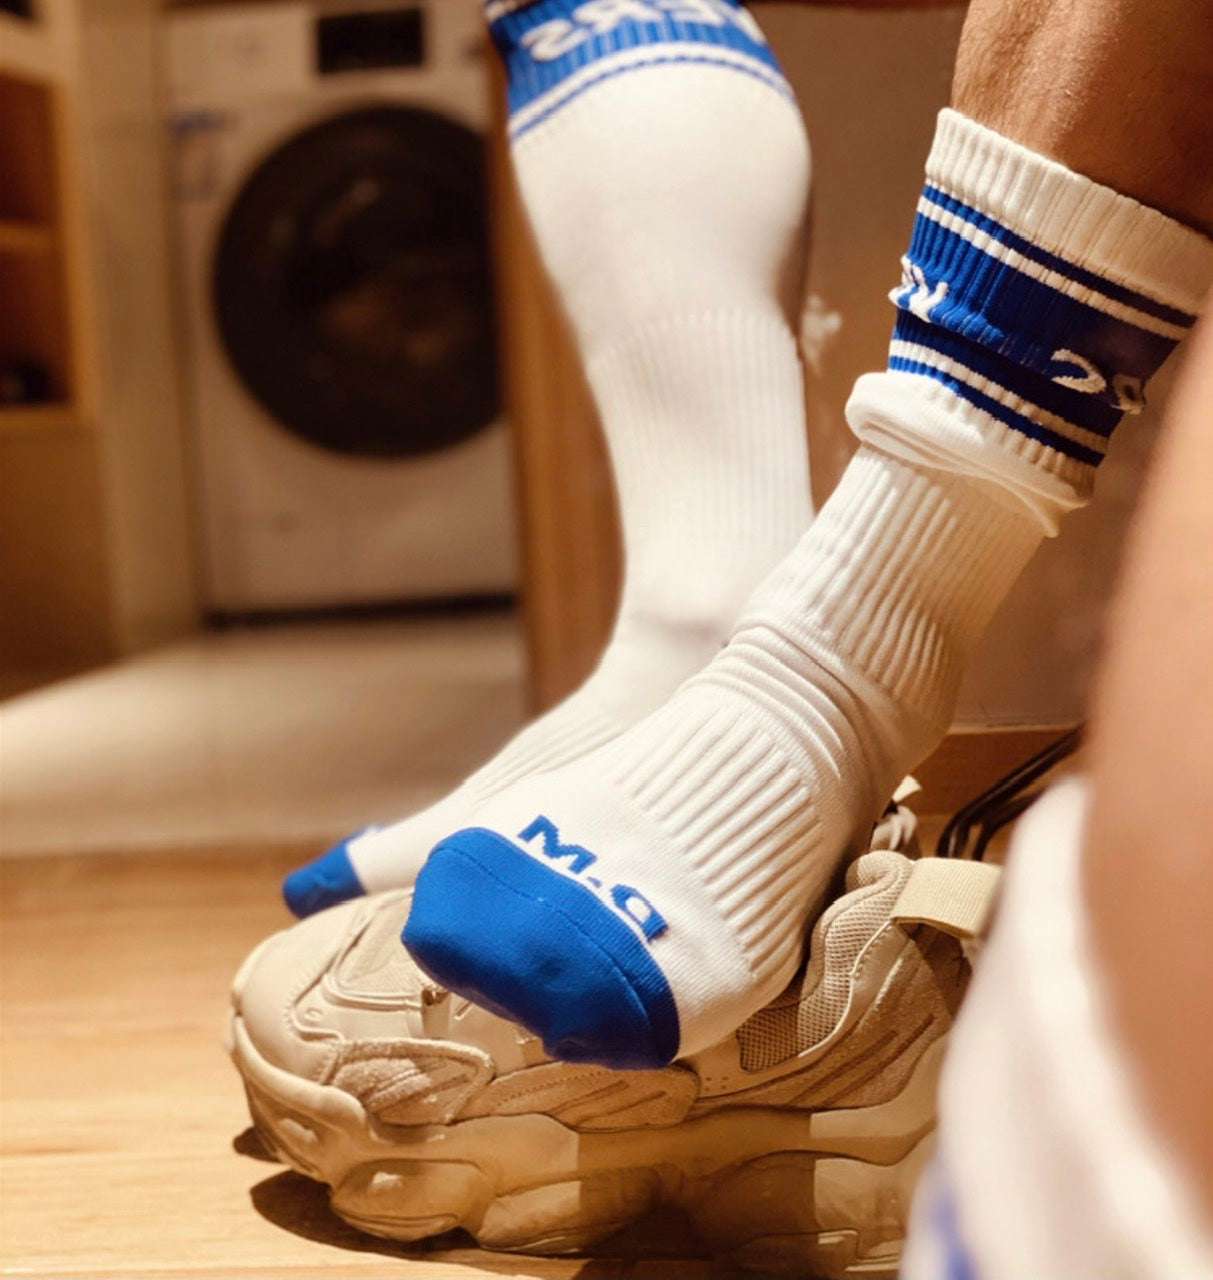 Tube Socks Dress Socks Gifts Men Exotic Formal Wear Men Sexy Sports Mesh Stocking Business Long Socks Men's Stockings - NansUniqueShop4Men